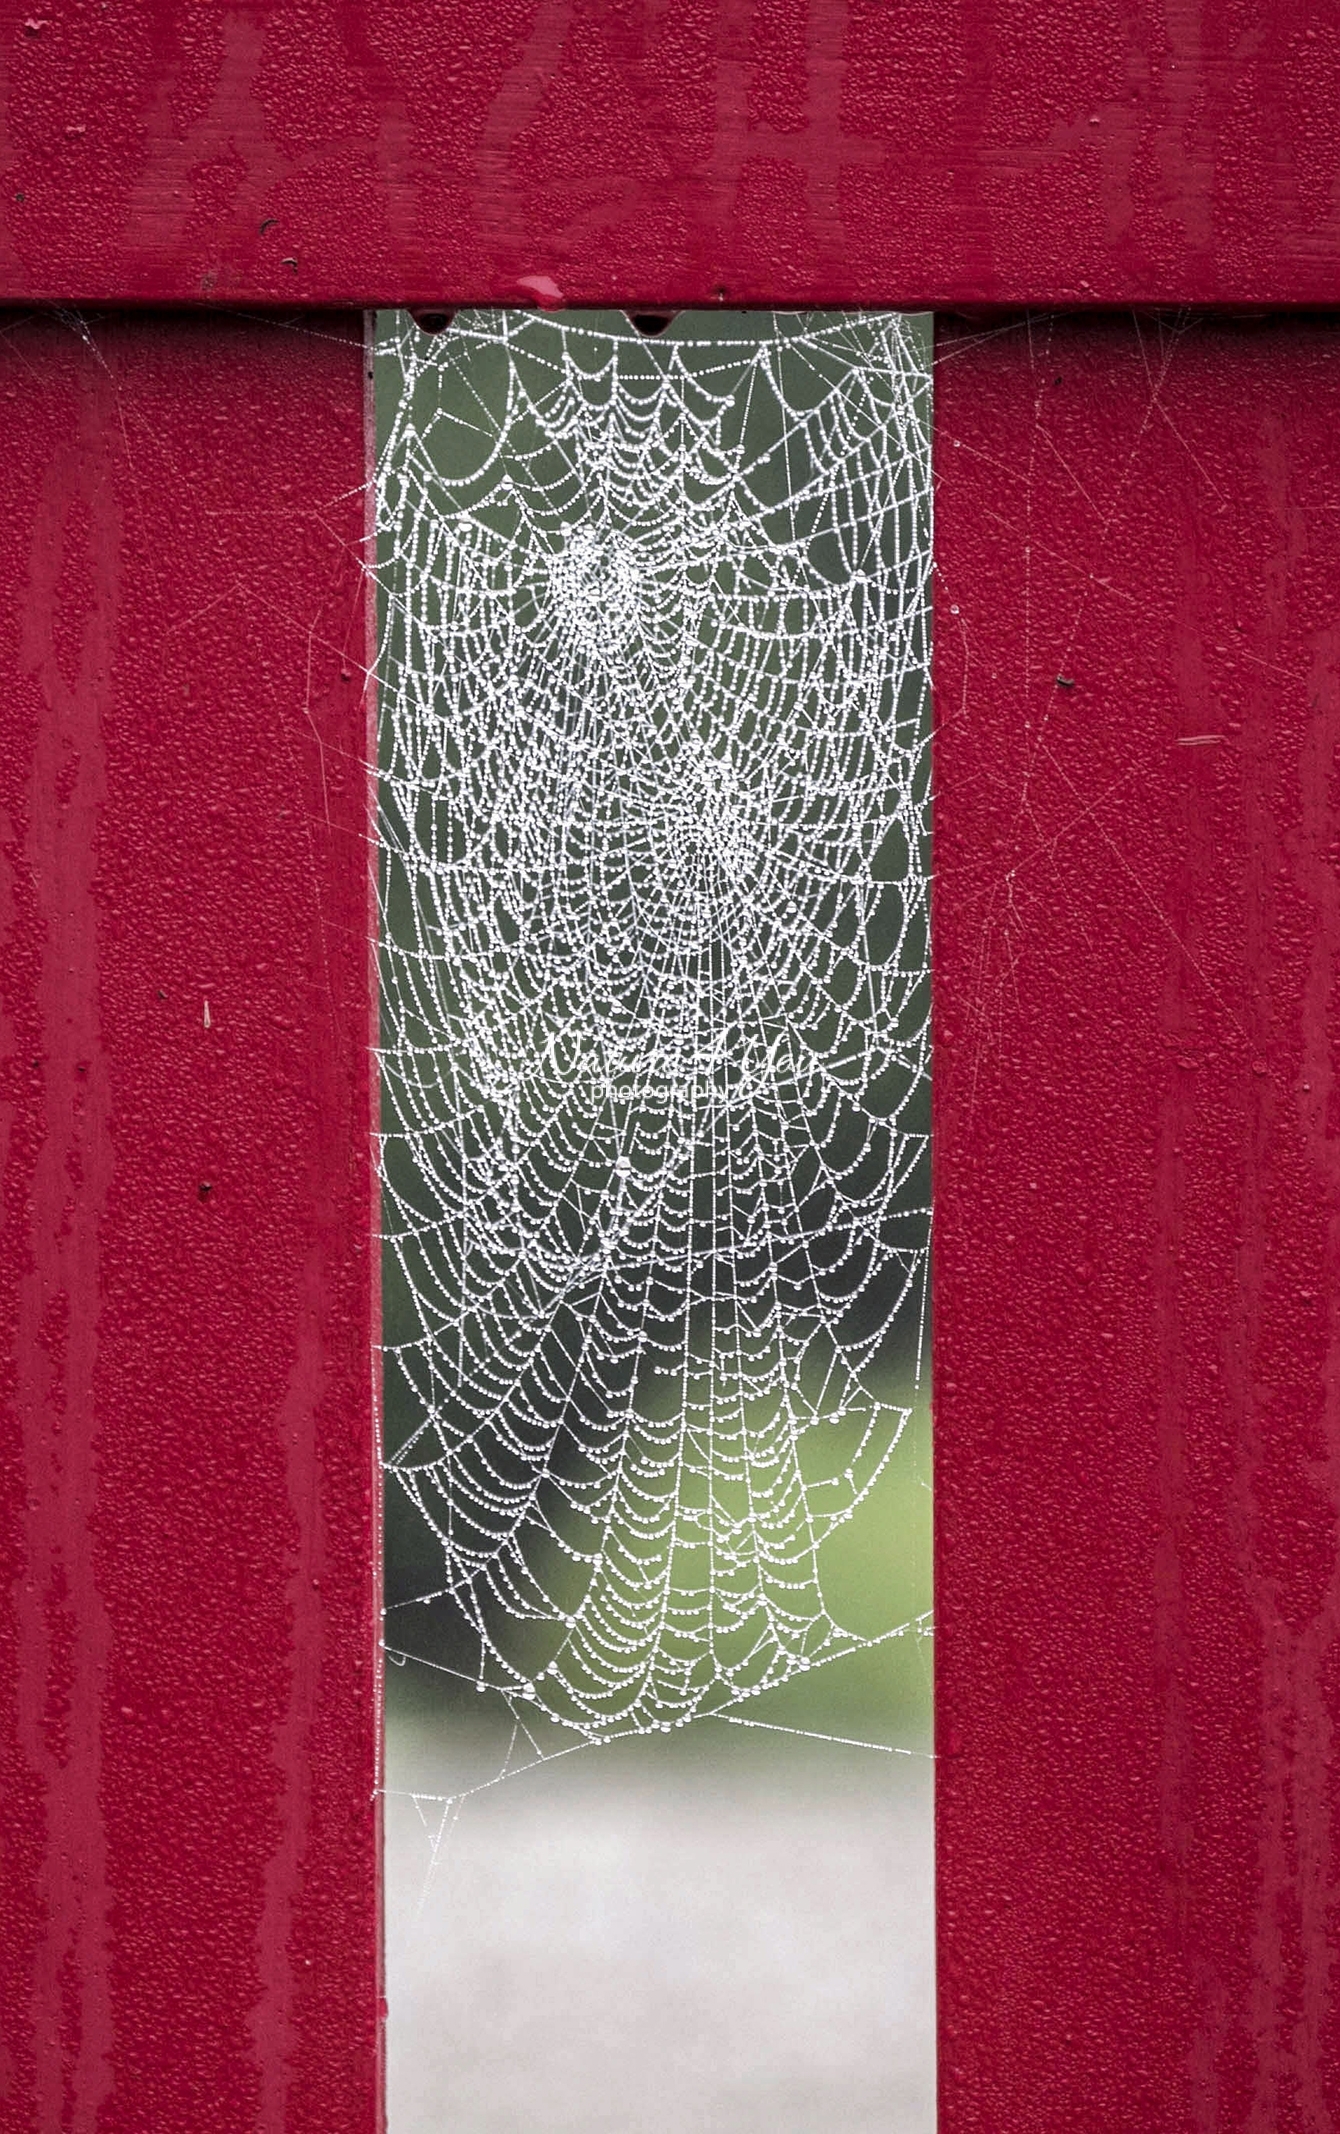 Spider web on red wooden gate in La Bourdonnerie